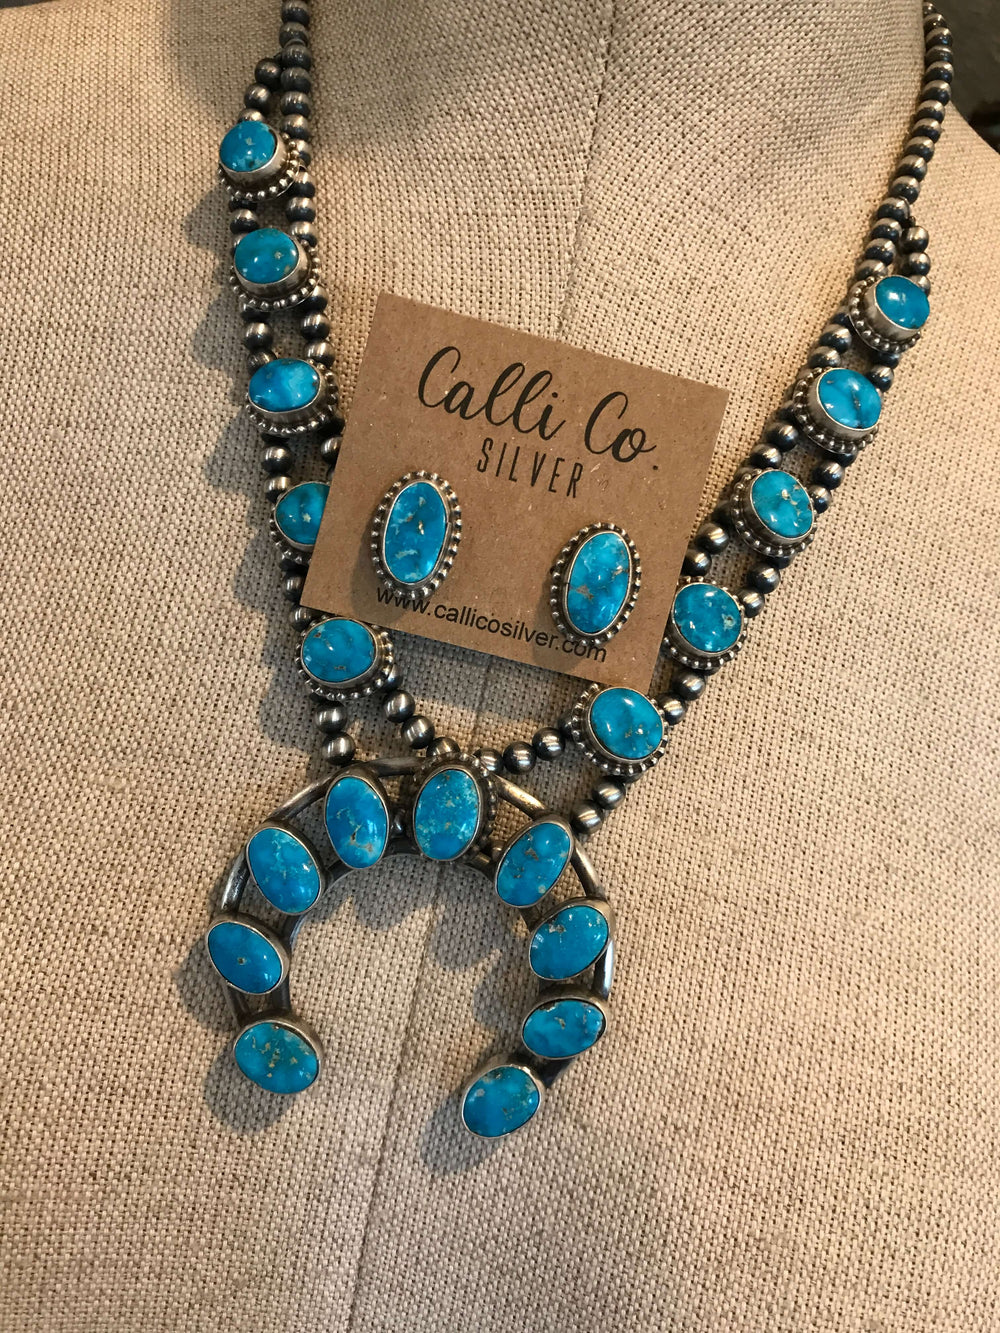 The Tullo Turquoise Ribbon Necklace, 3 – Calli Co. Silver